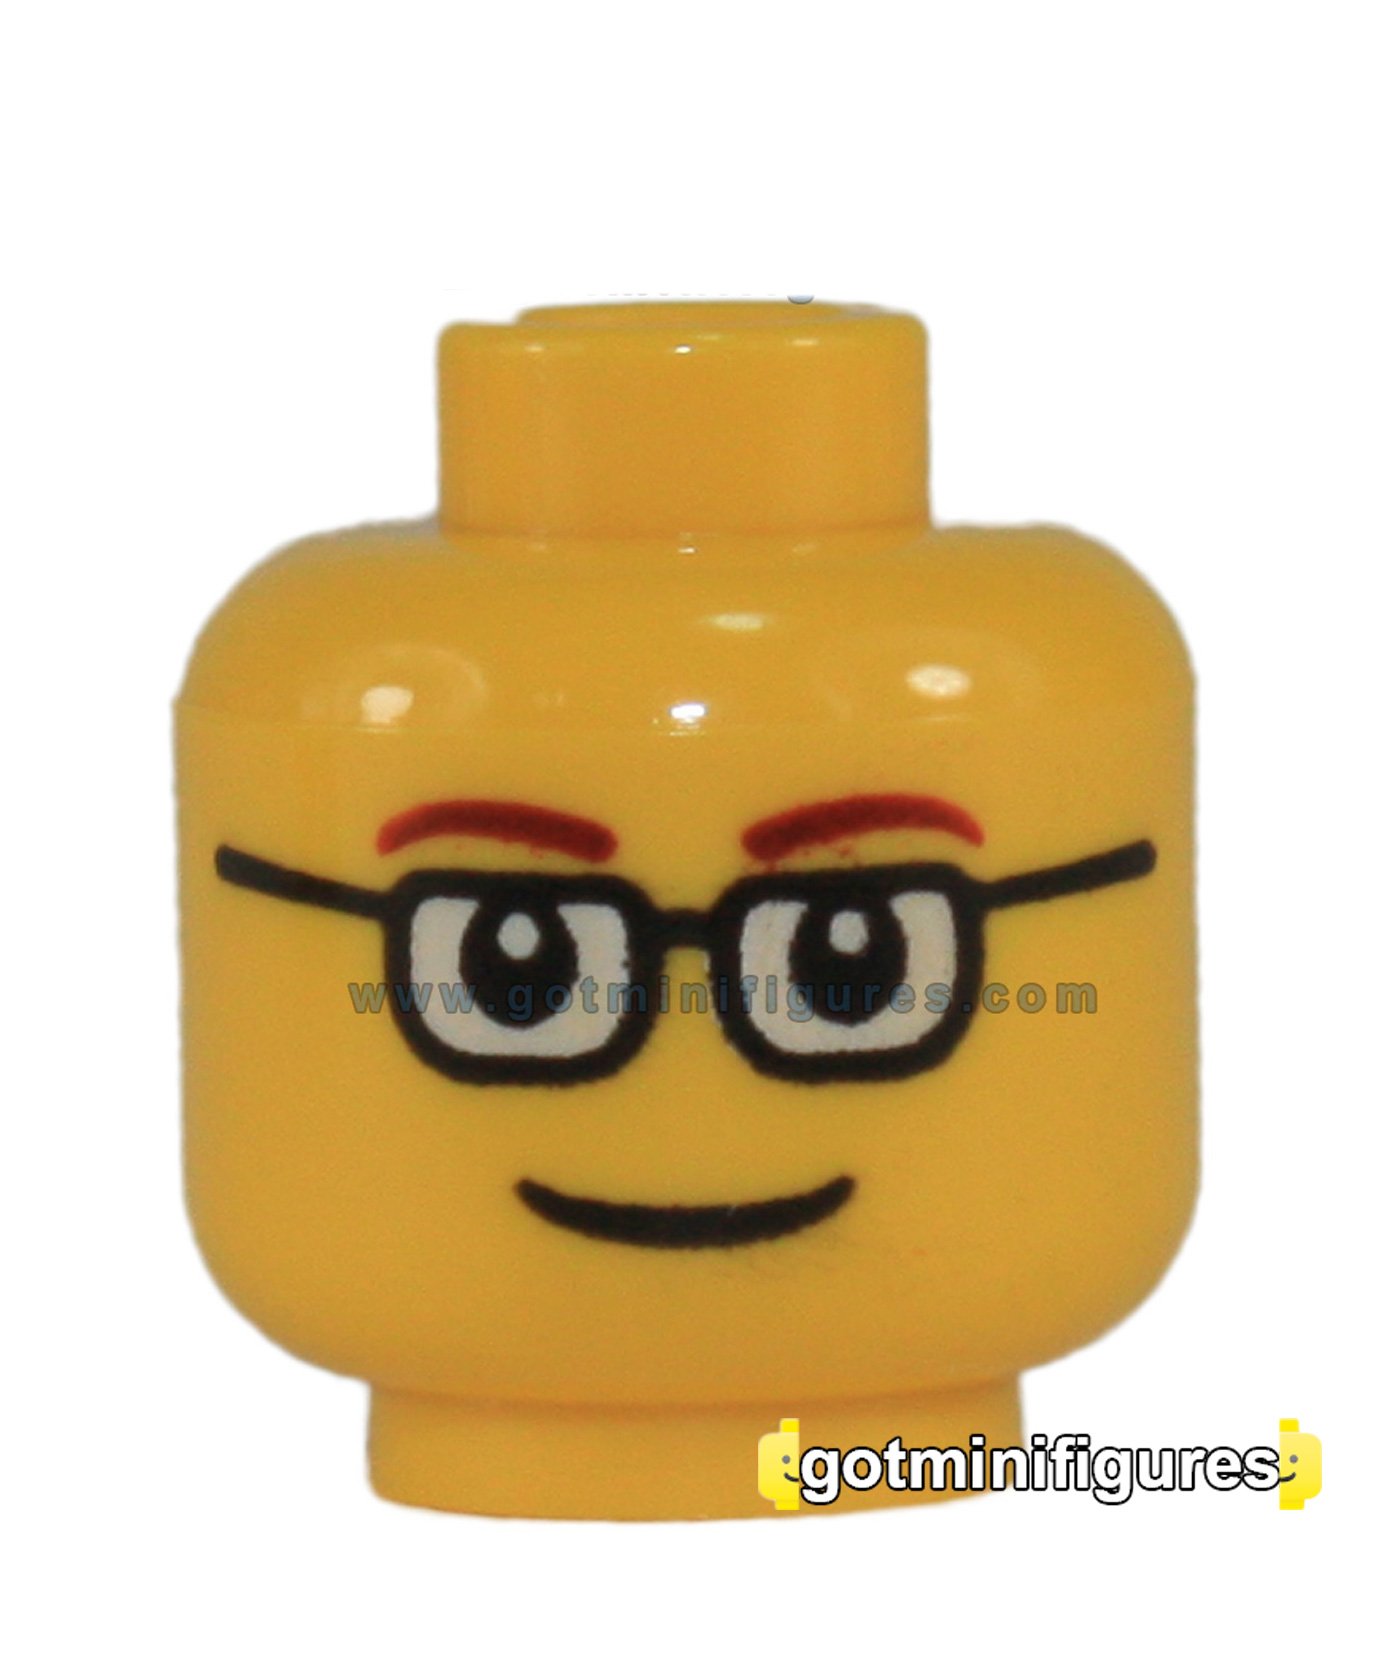 LEGO MAN w/ silver glasses Head (yellow) for minifigure | gotminifigures